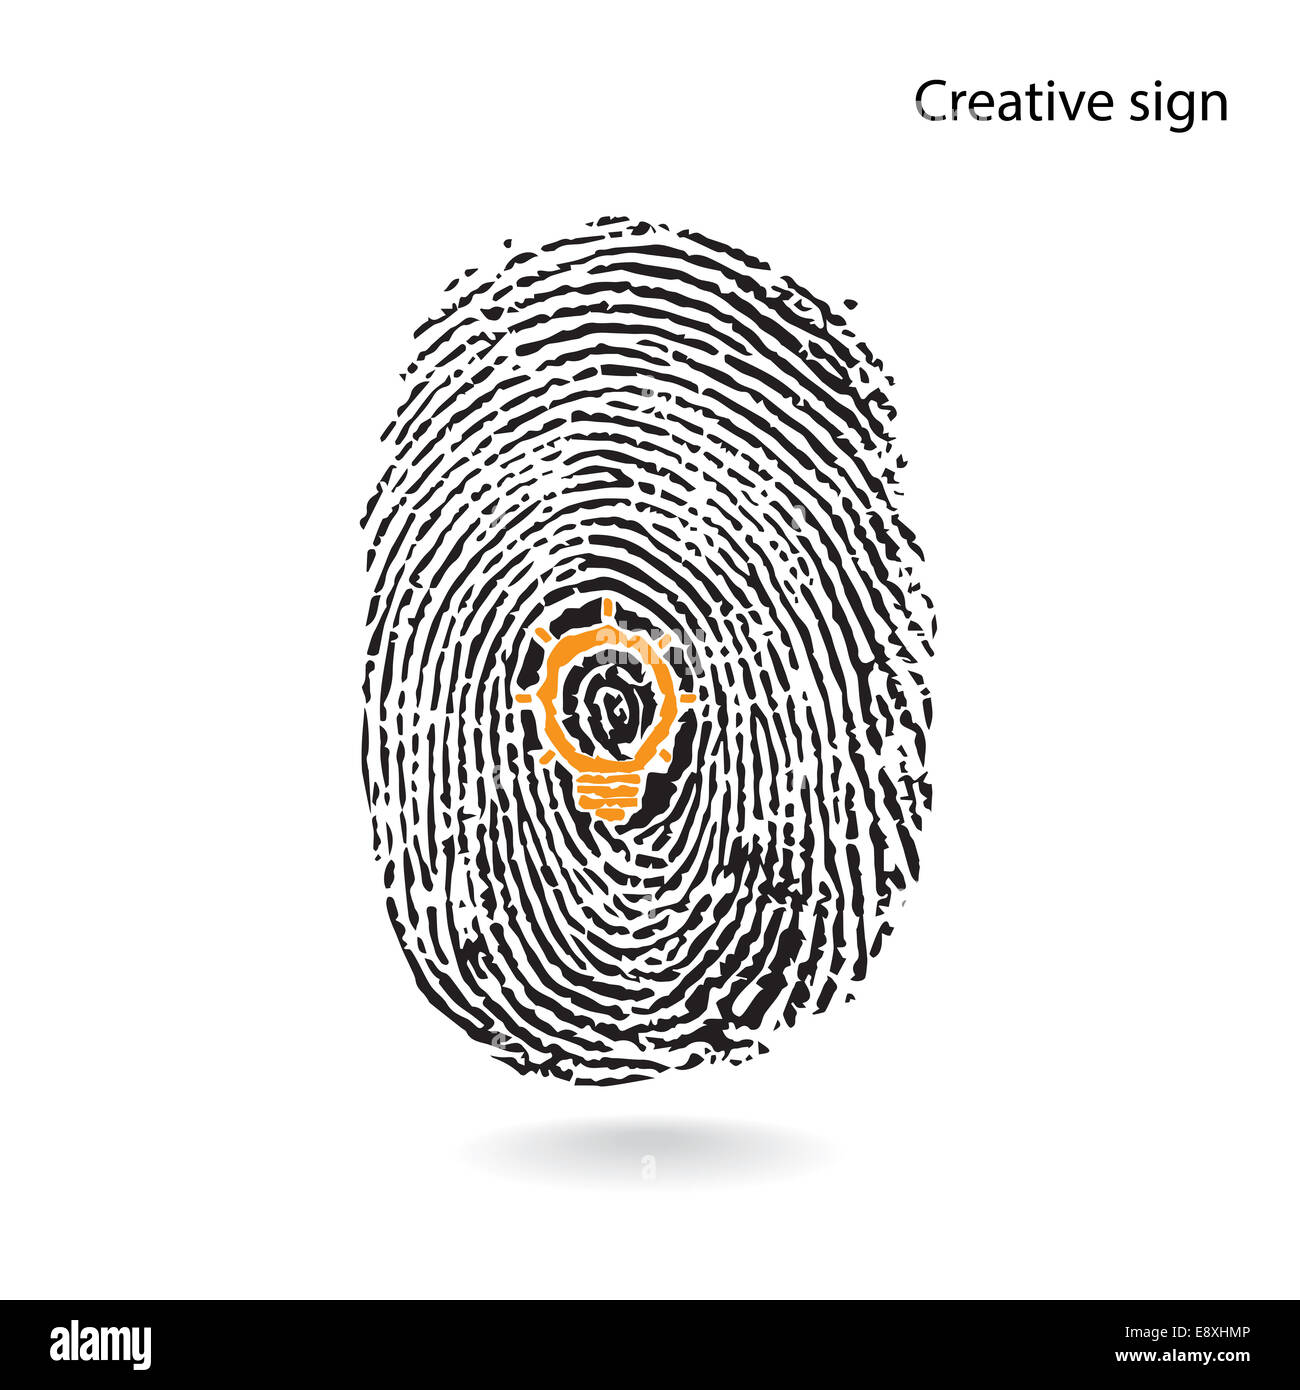 Creative light bulb idea concept with fingerprint symbol. Education sign , business ideas. Stock Photo